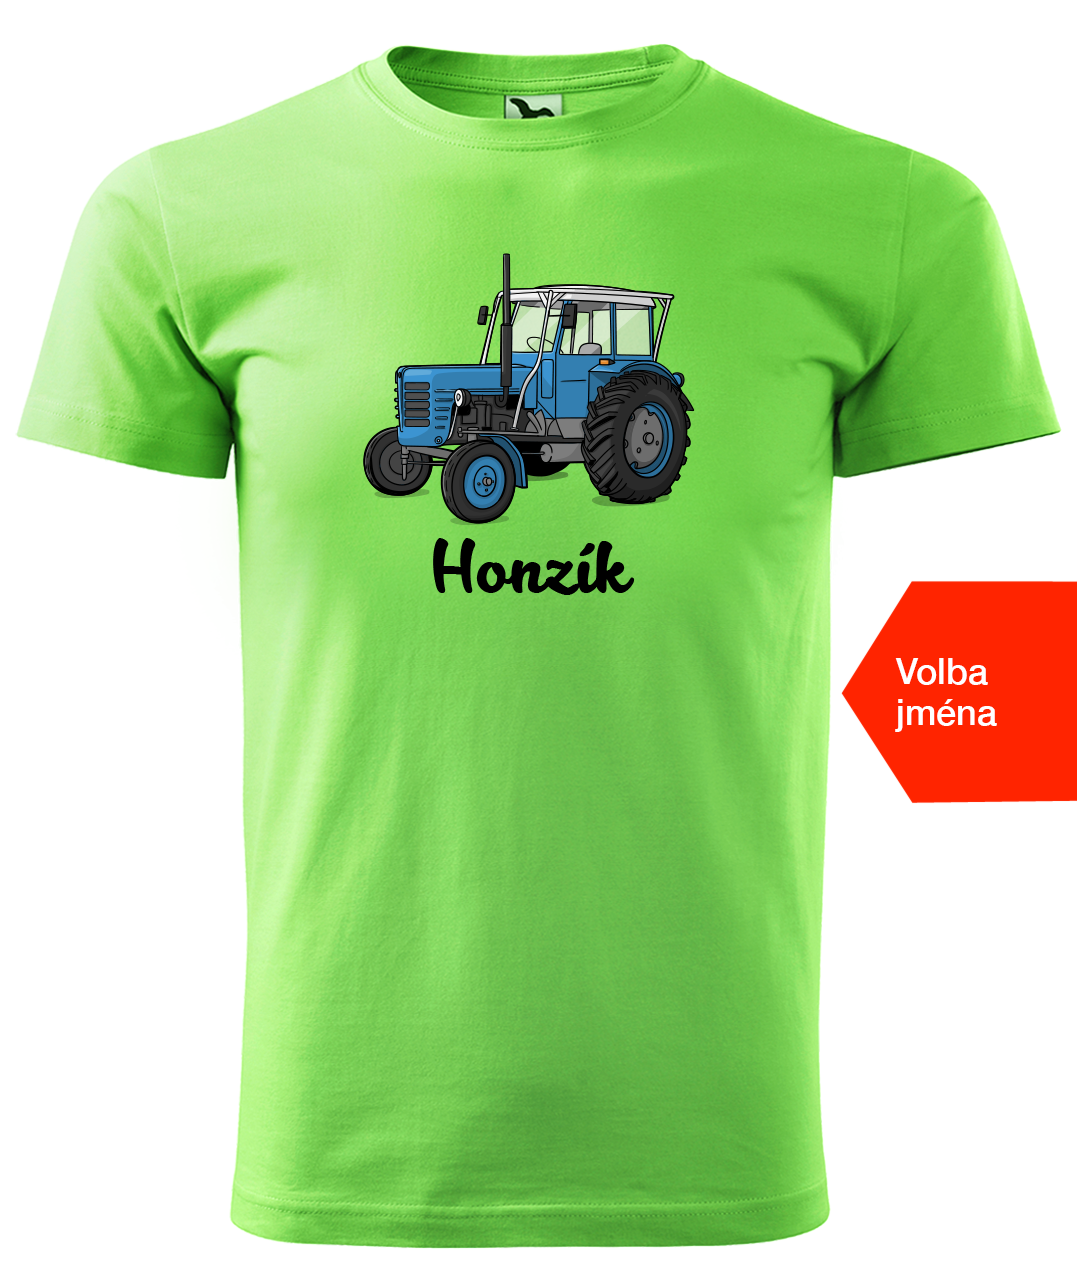 Dětské tričko s traktorem a jménem - Starý traktor Velikost: 12 let / 158 cm, Barva: Apple Green (92)